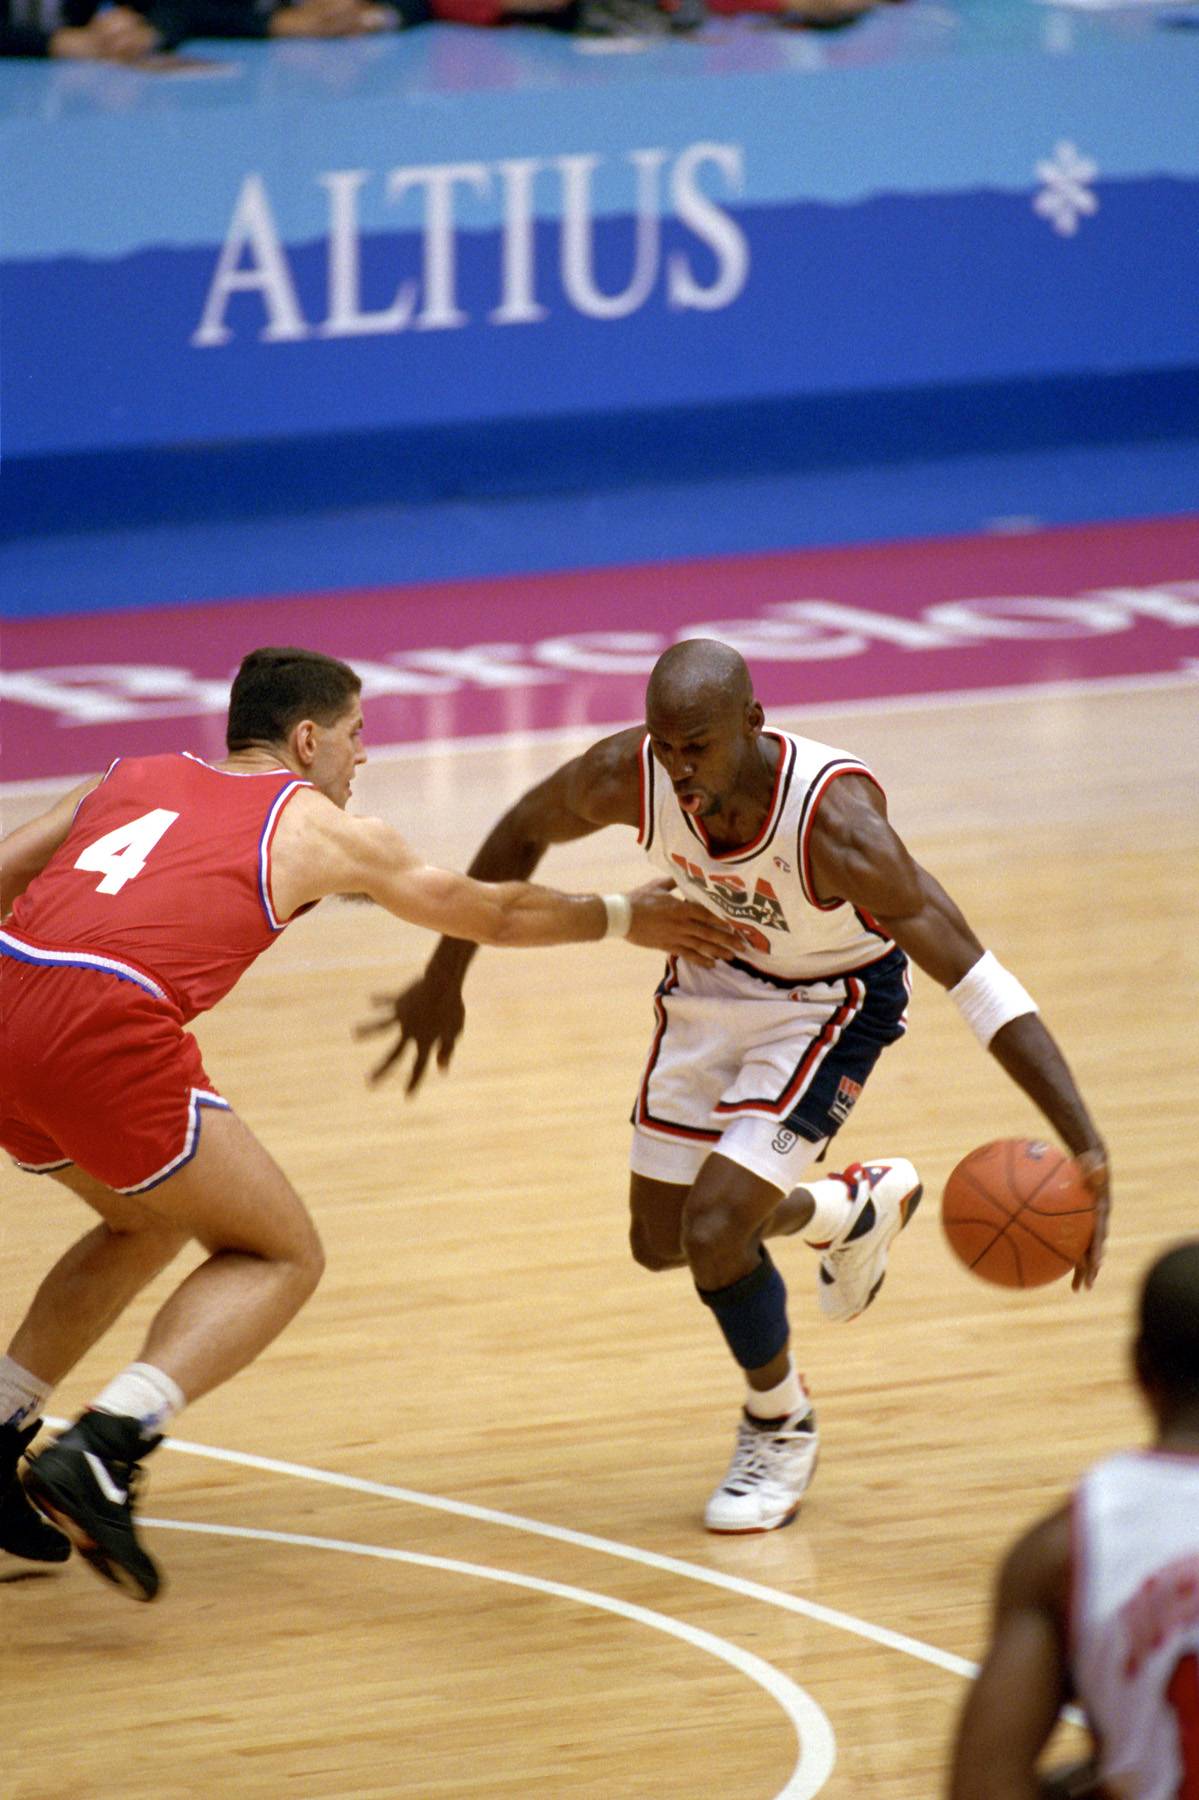 Slam! - Michael Jordan - Image 14 from Remembering the 1992 Dream Team